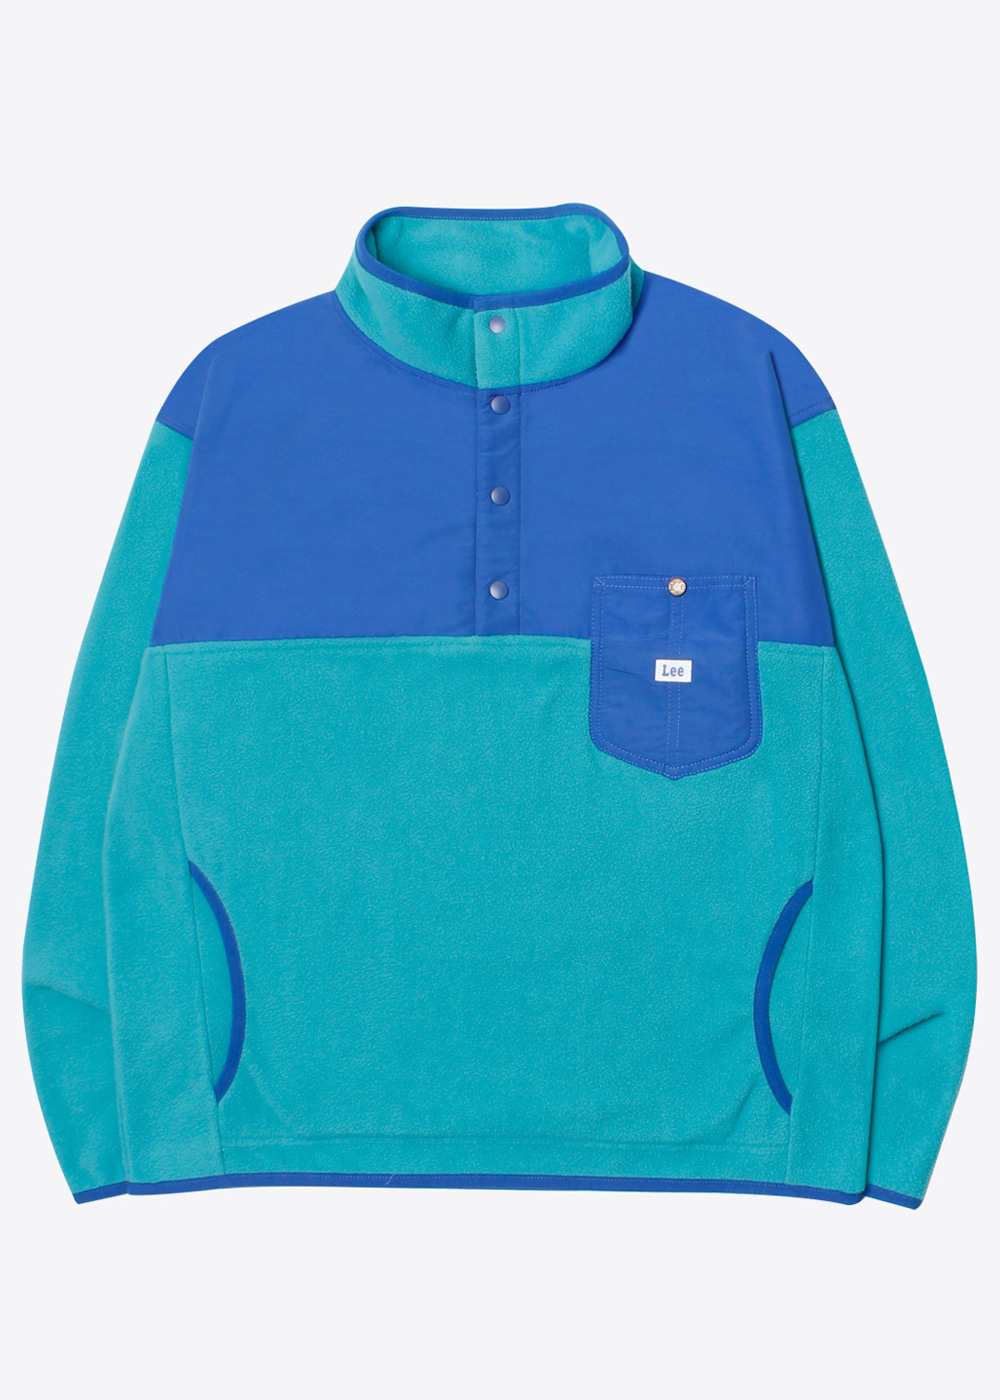 LEE’over fit’color scheme fleece jacket